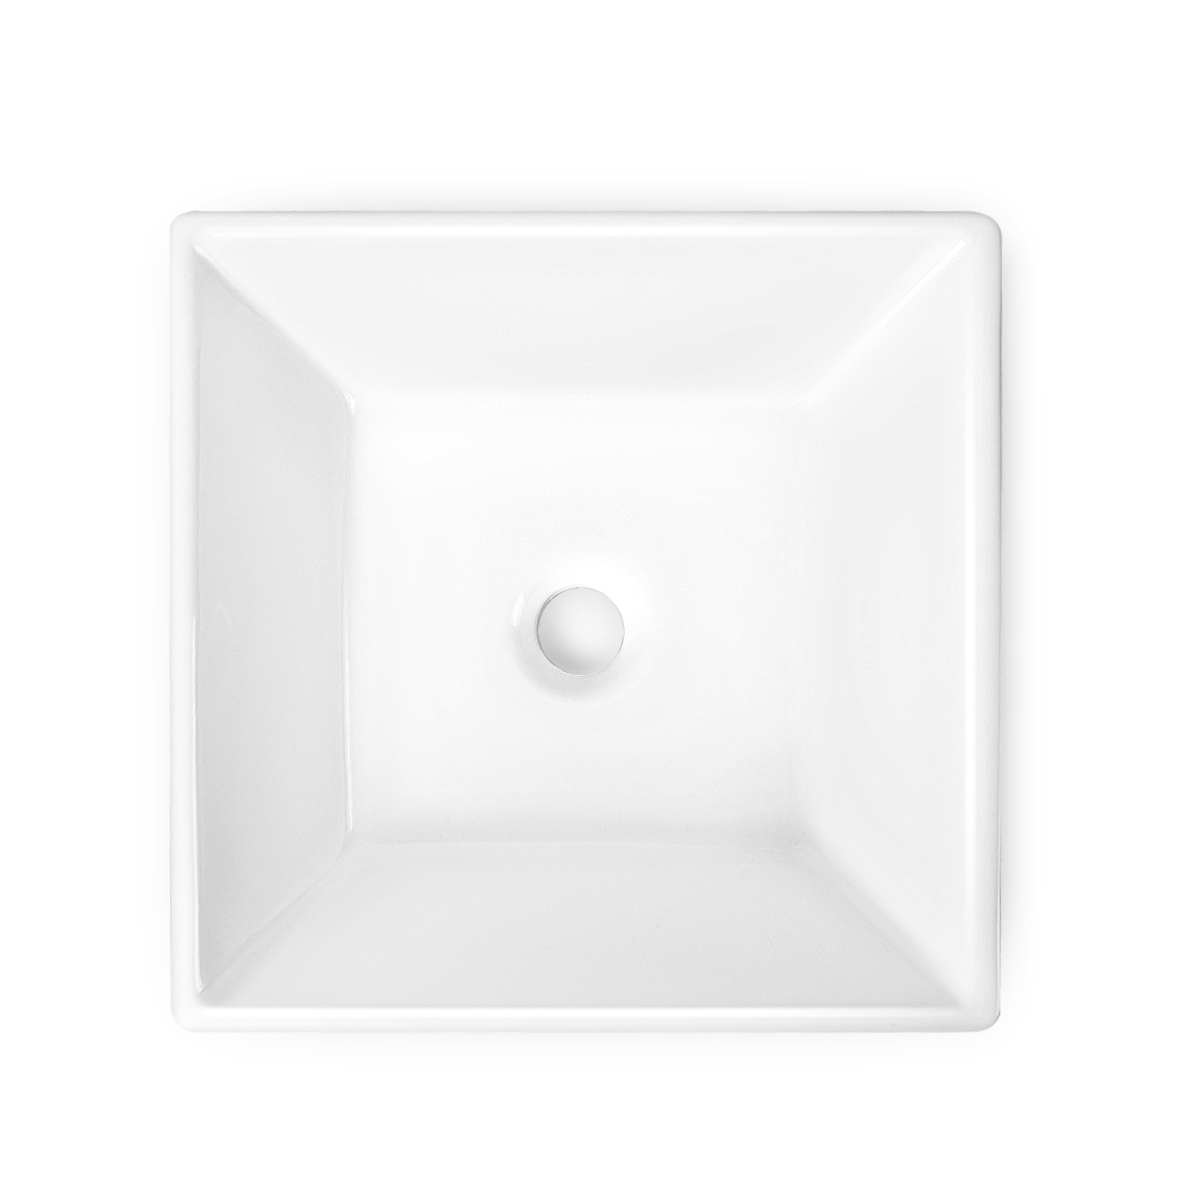 BVS1616A-OL 16" x 16" White Square Ceramic Countertop Bathroom Vanity Vessel Sink